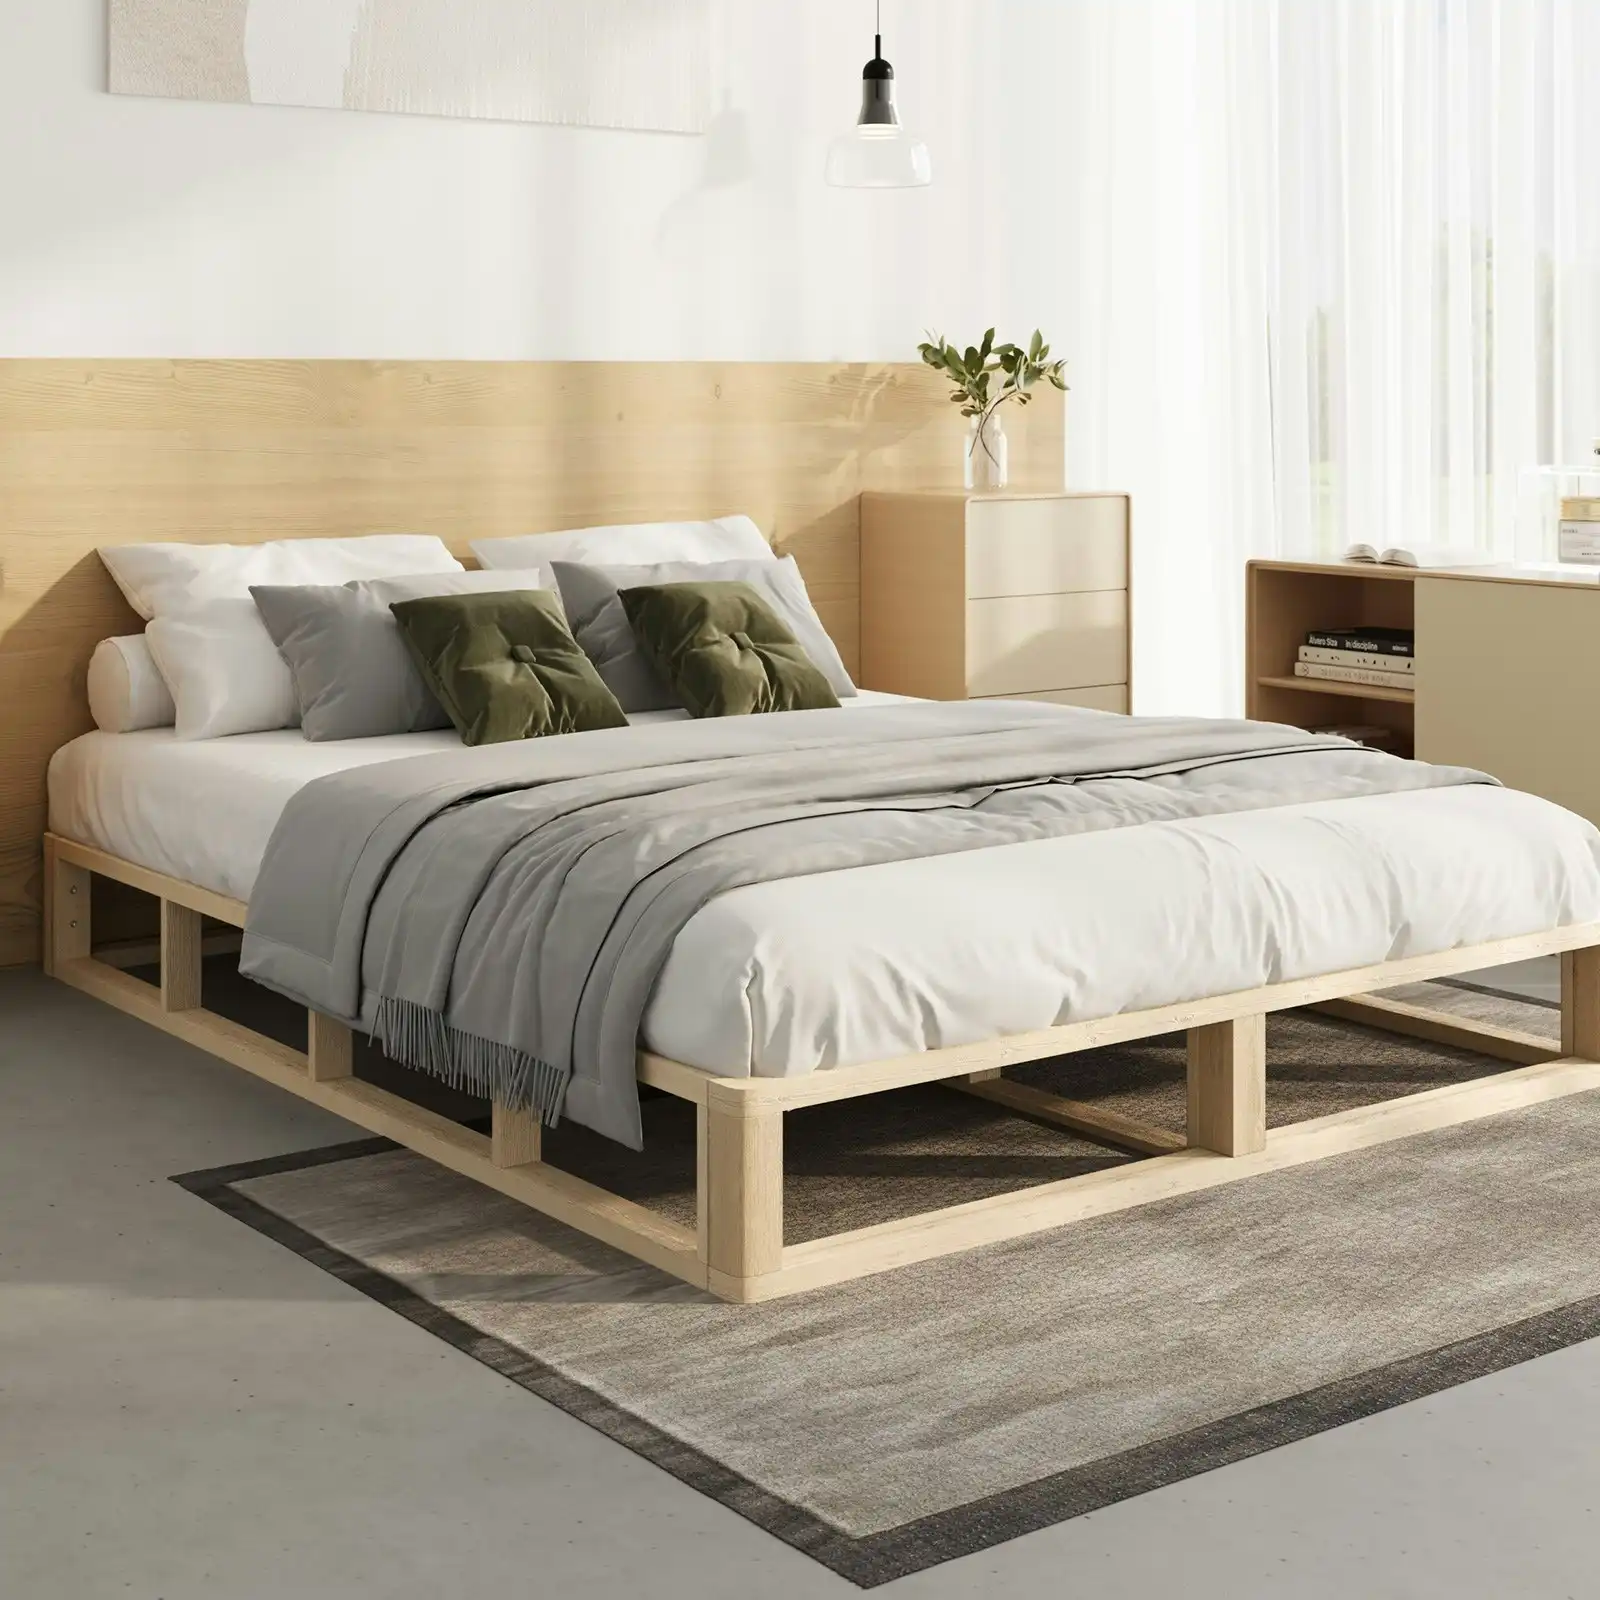 Oikiture Bed Frame Queen Size Bed Base Wooden Platform Cage-like Base